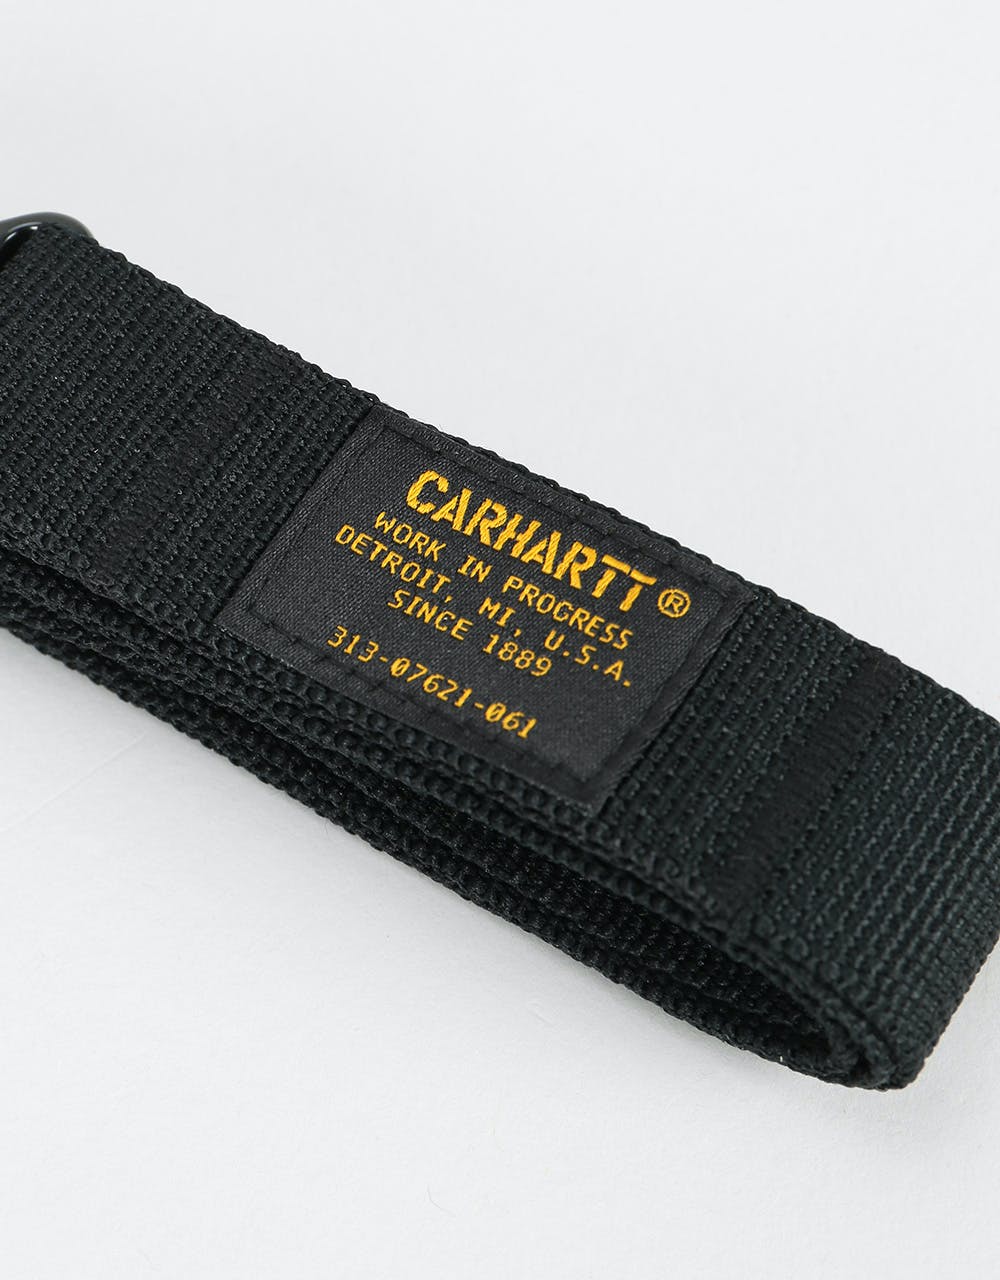 Carhartt WIP Military Key Chain Long - Black